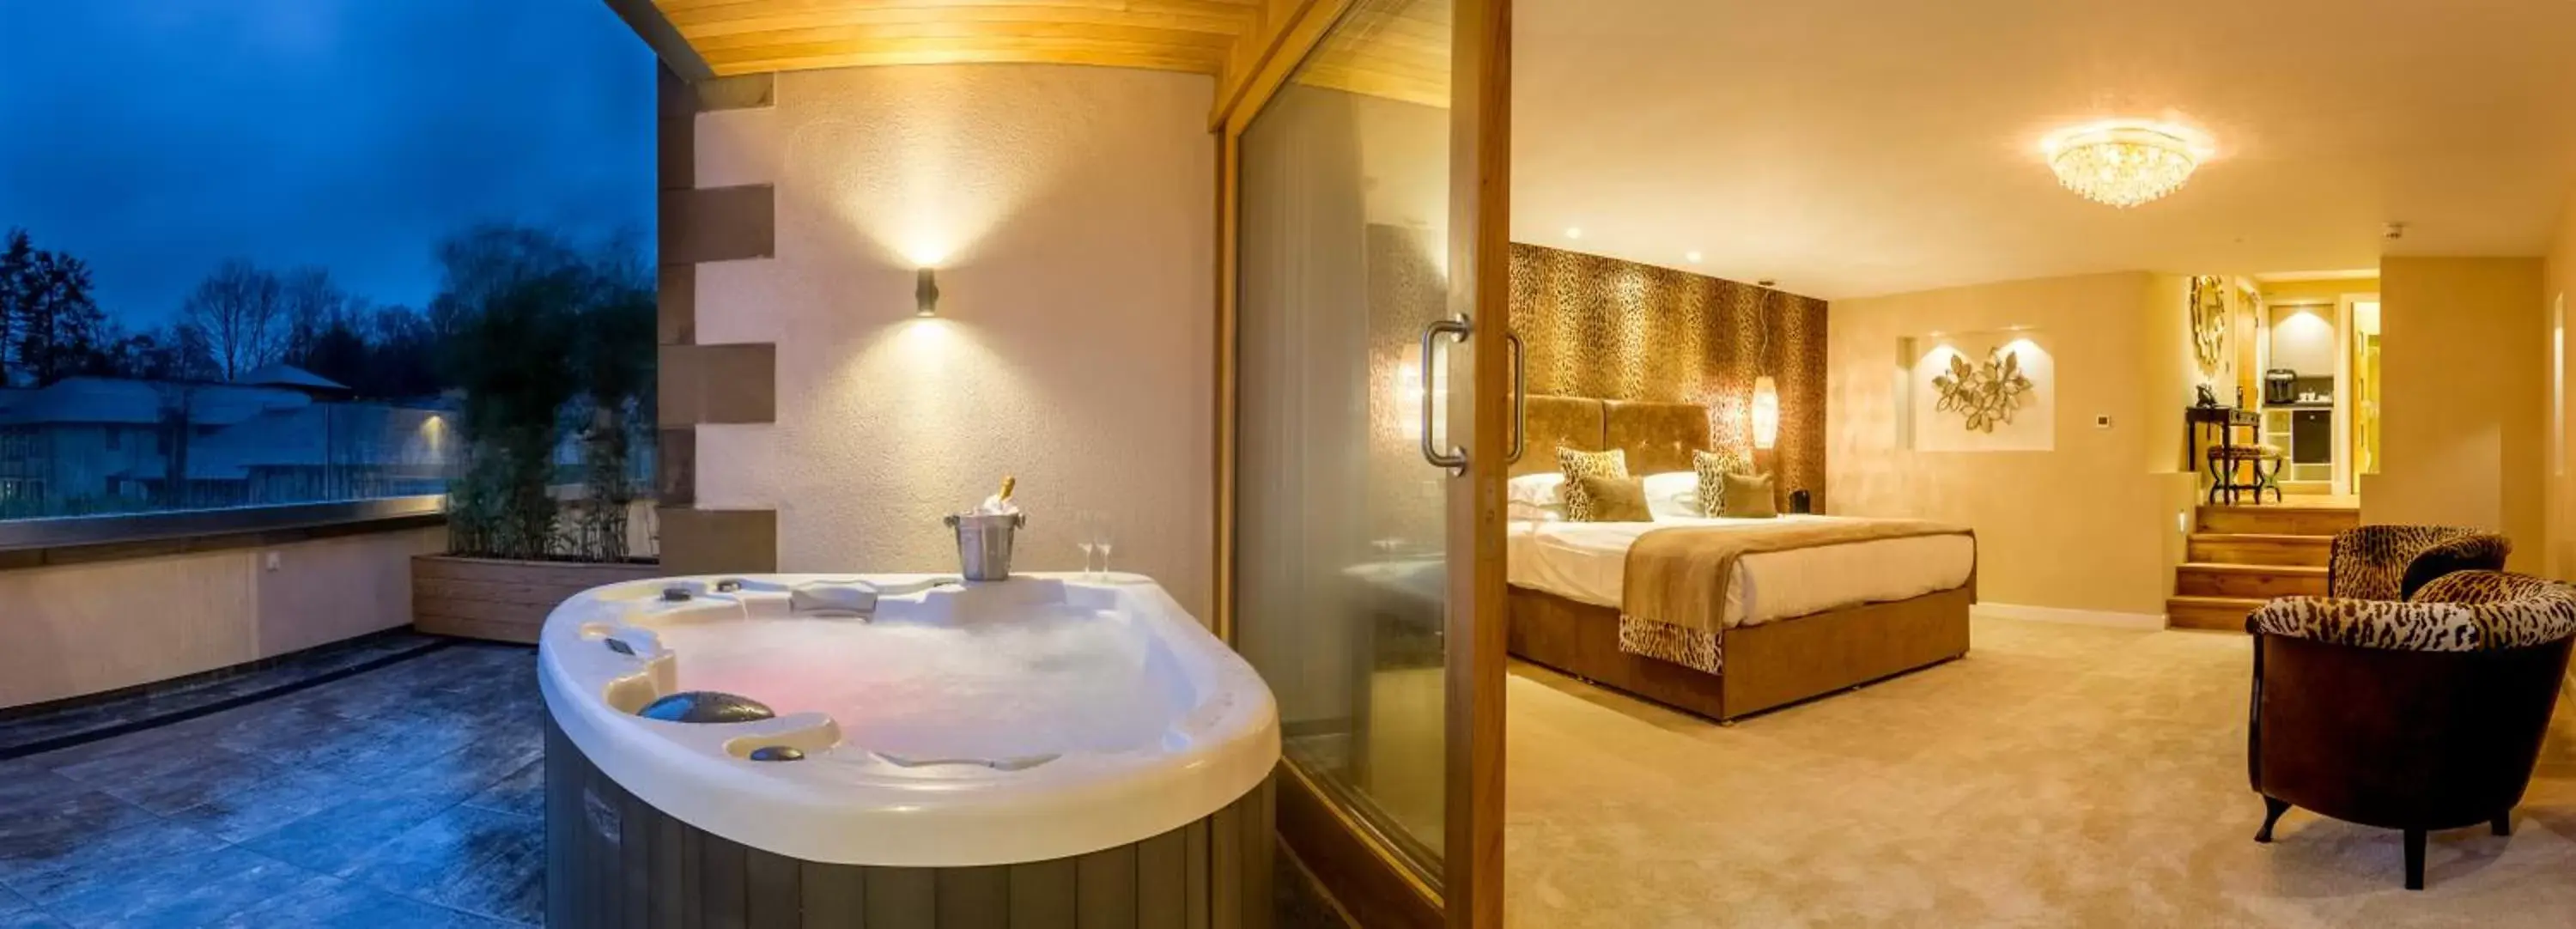 Hot Tub, Bathroom in Applegarth Villa Hotel & Restaurant (Adult Only)